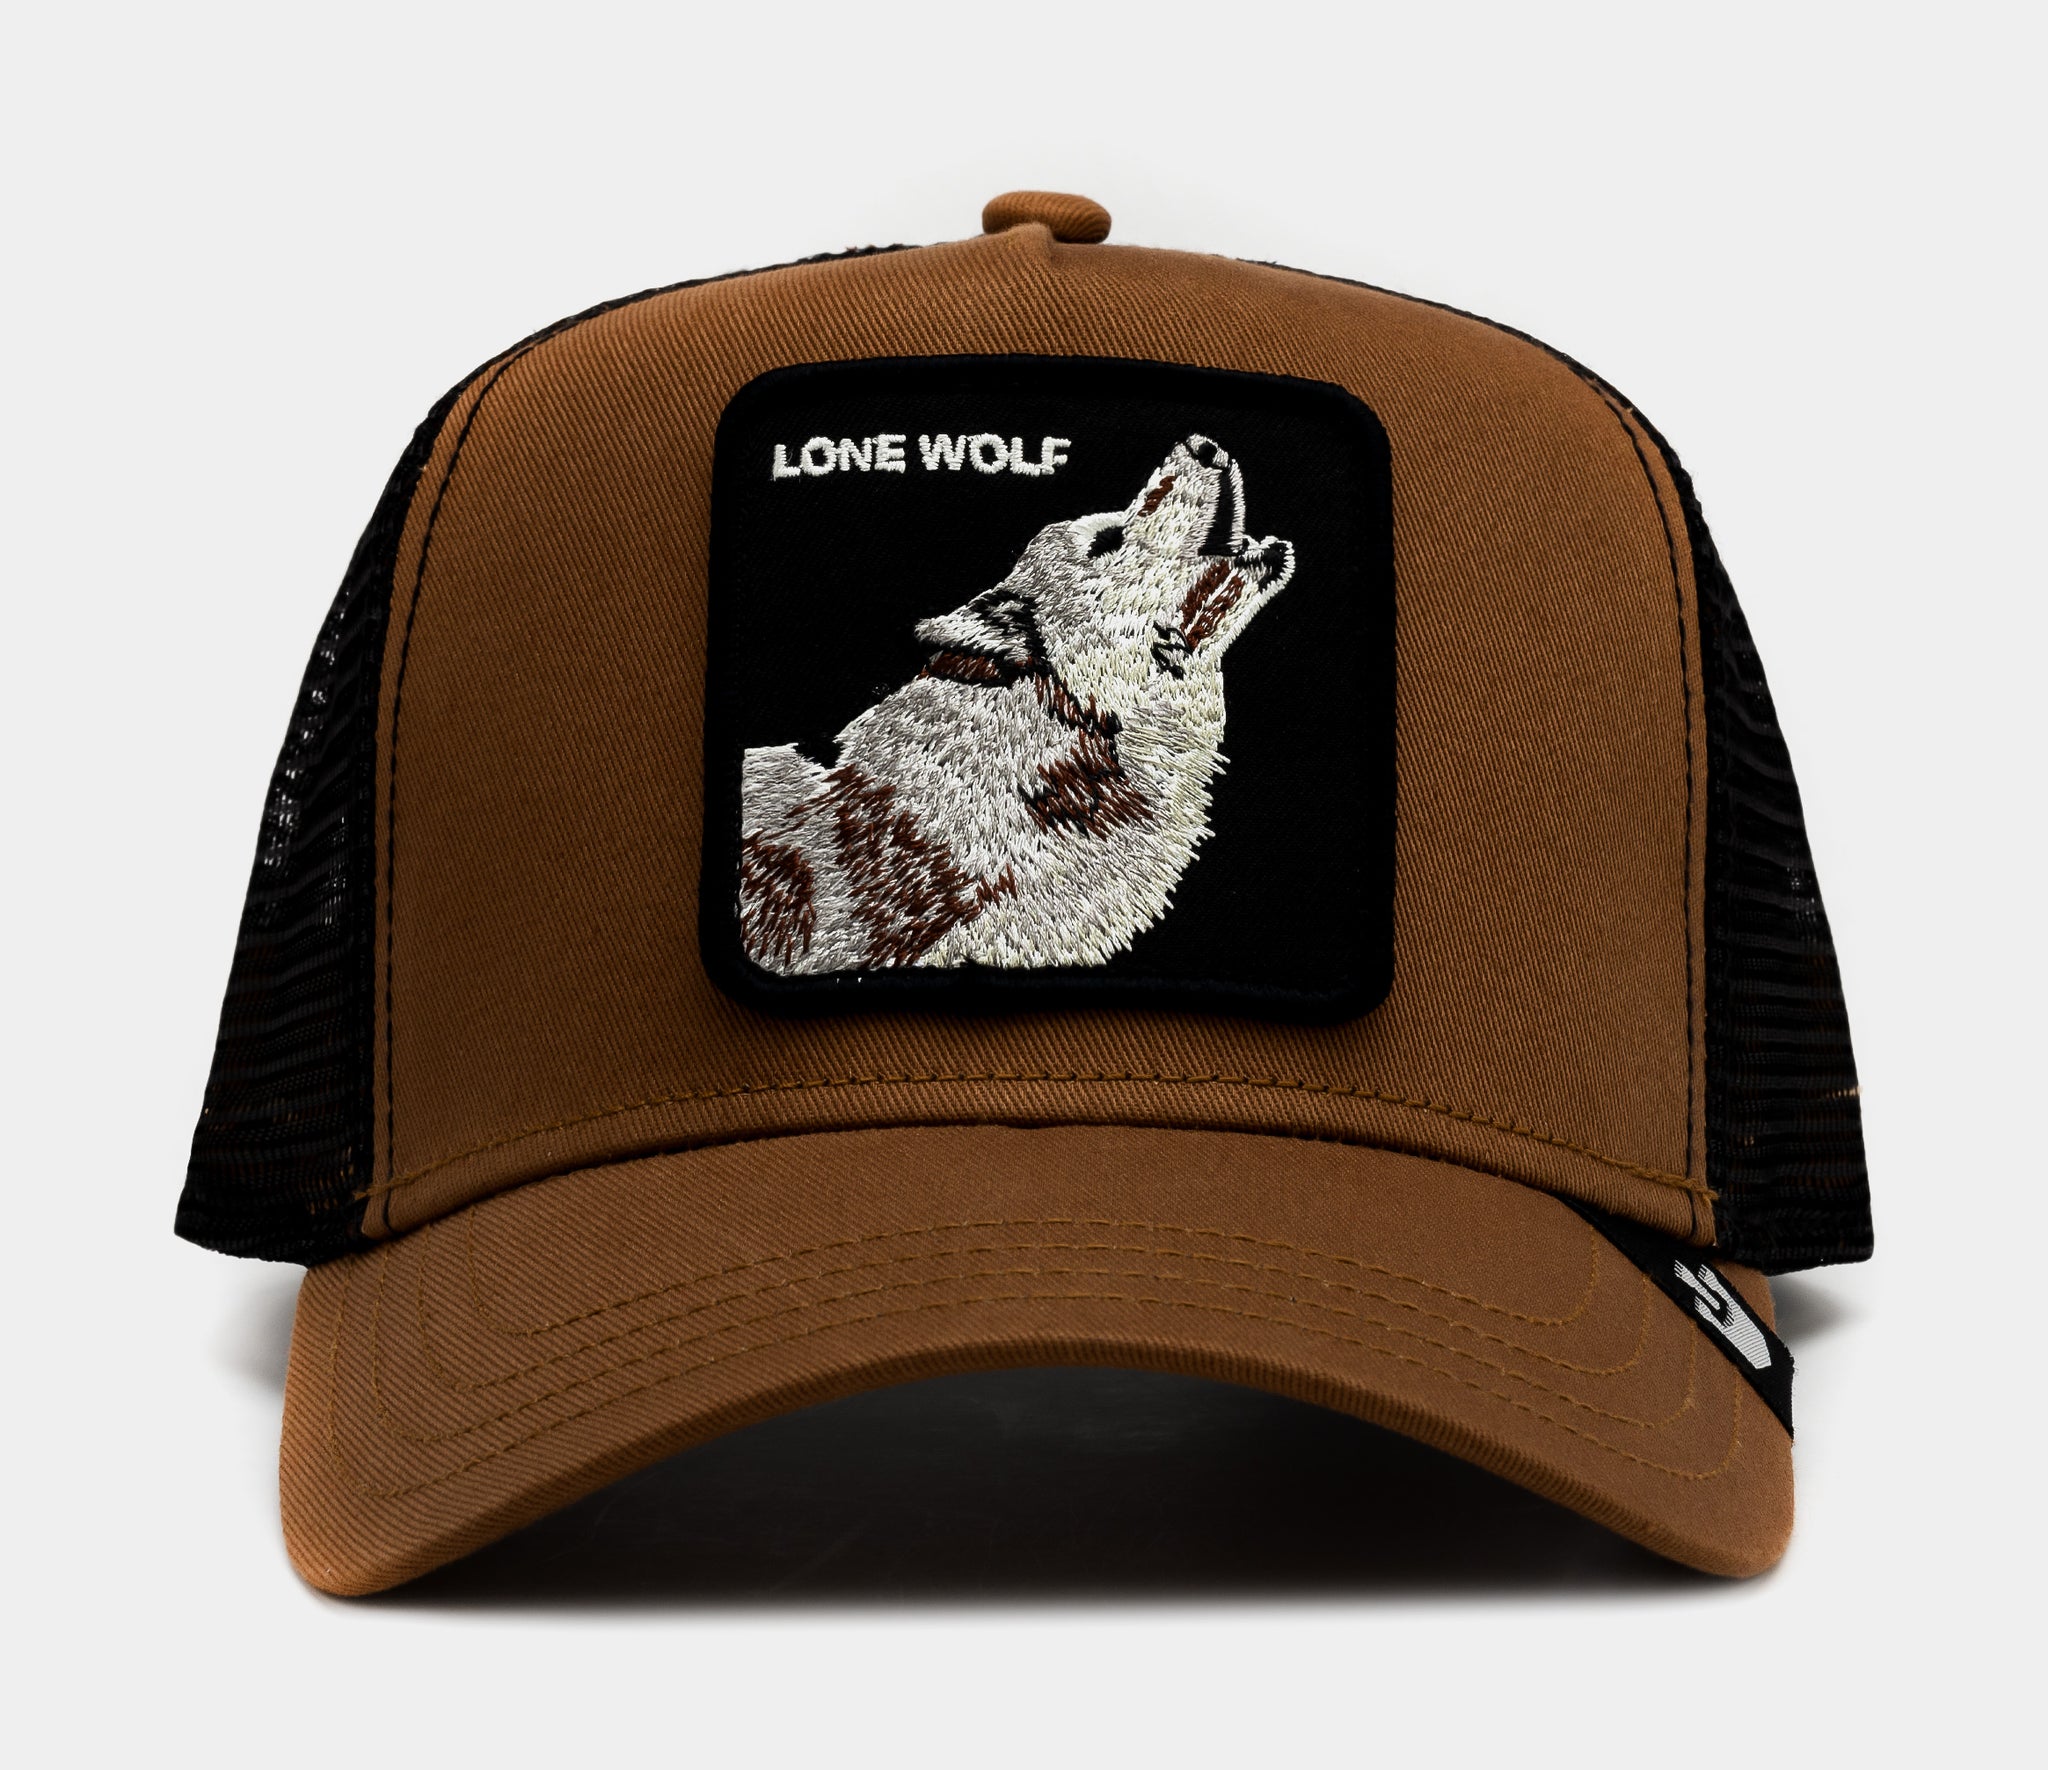 The Lone Wolf – Goorin Bros.